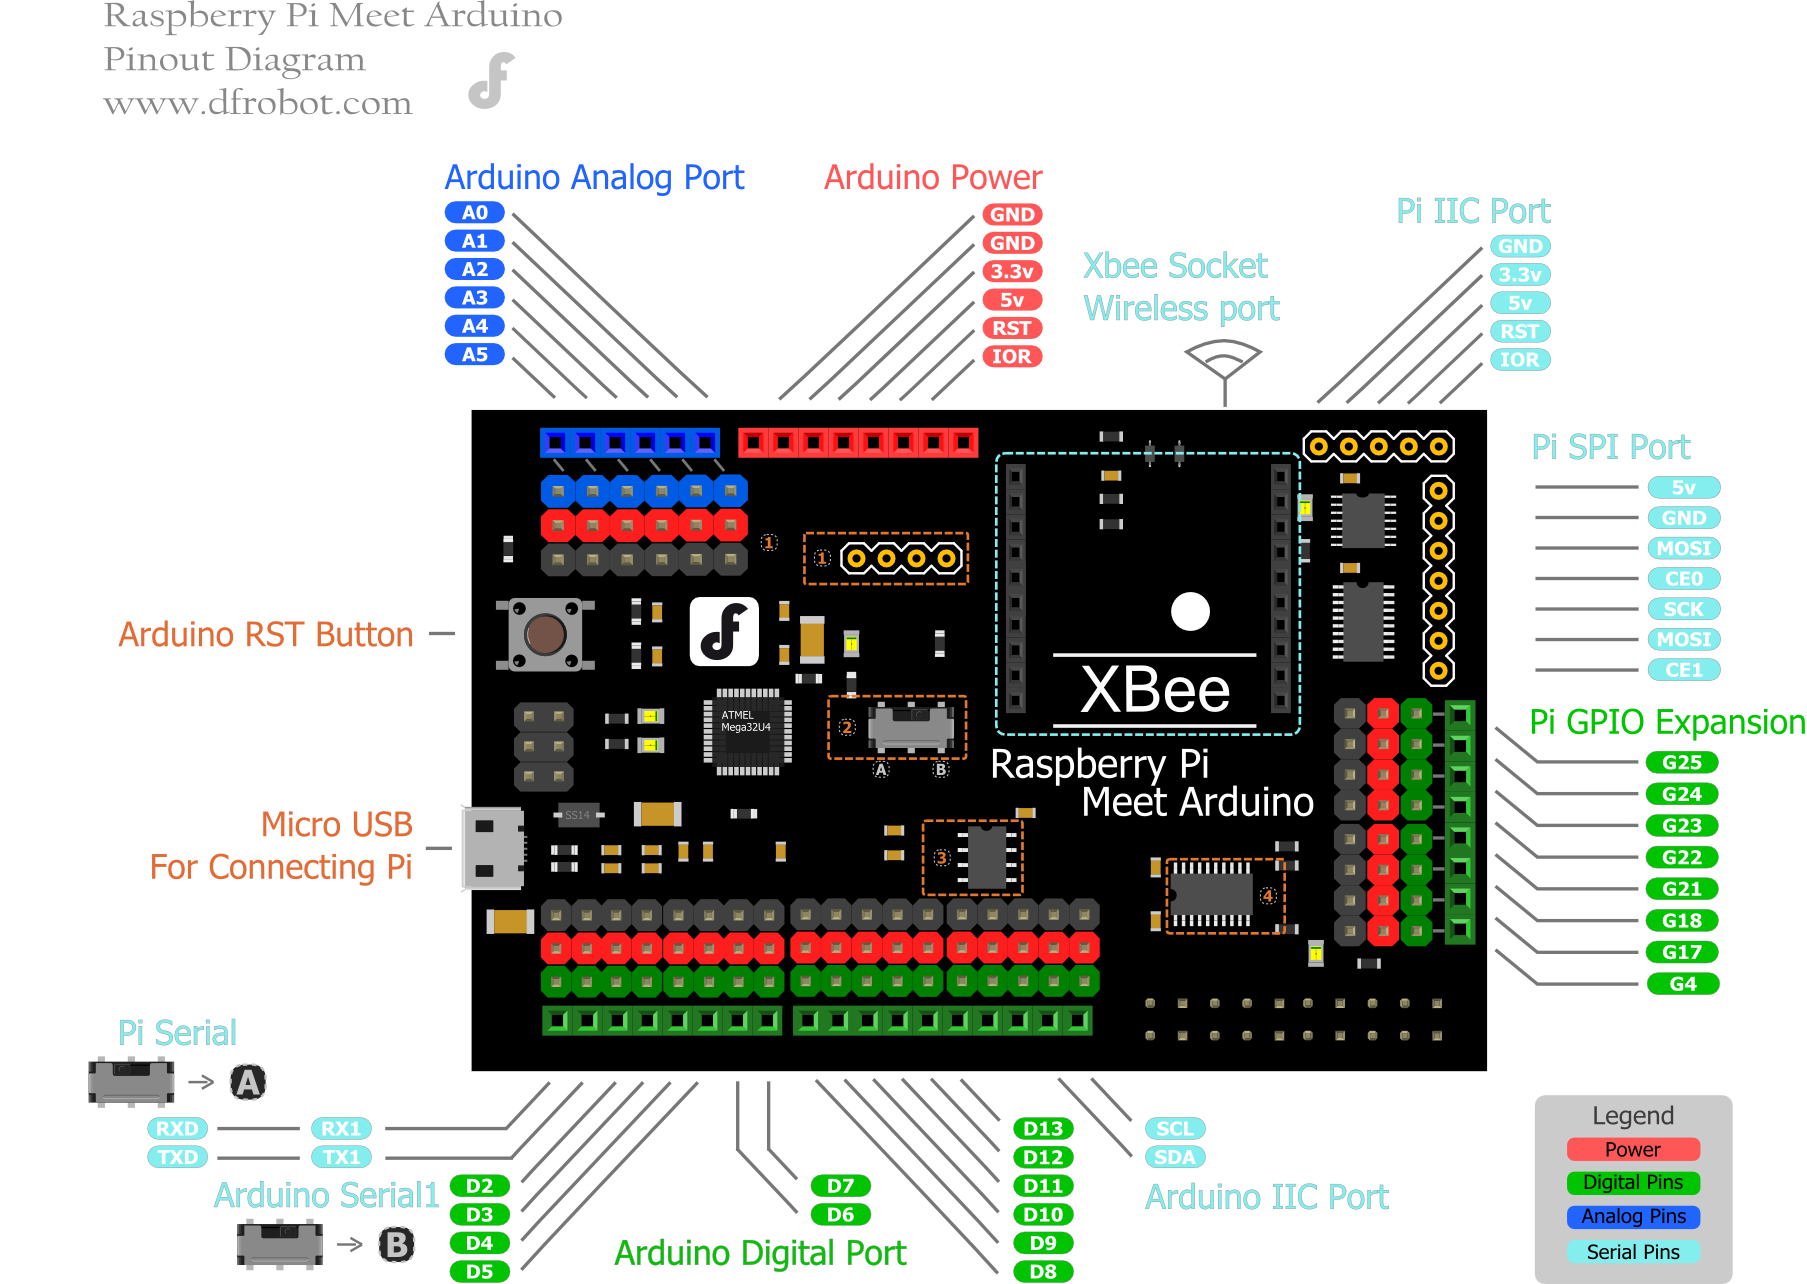  Fig1: Pi Meet Arduino Pinout